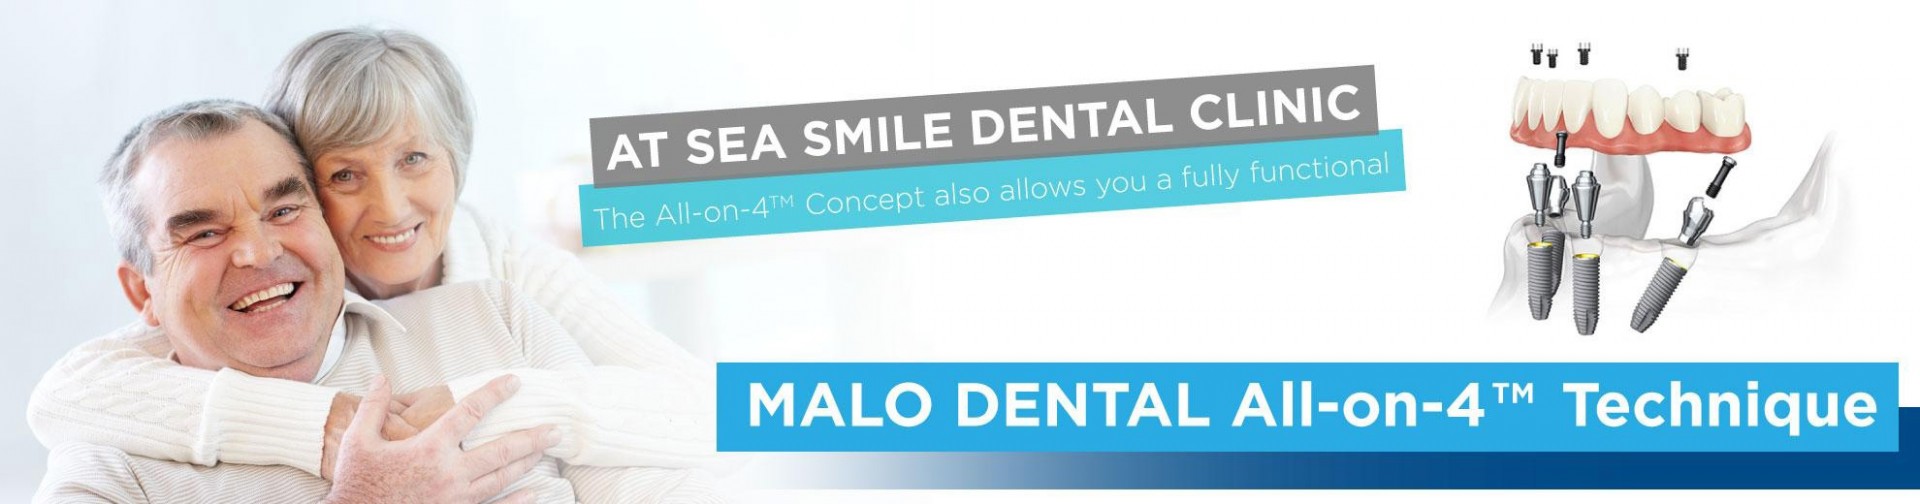 at sea smile dental clinic